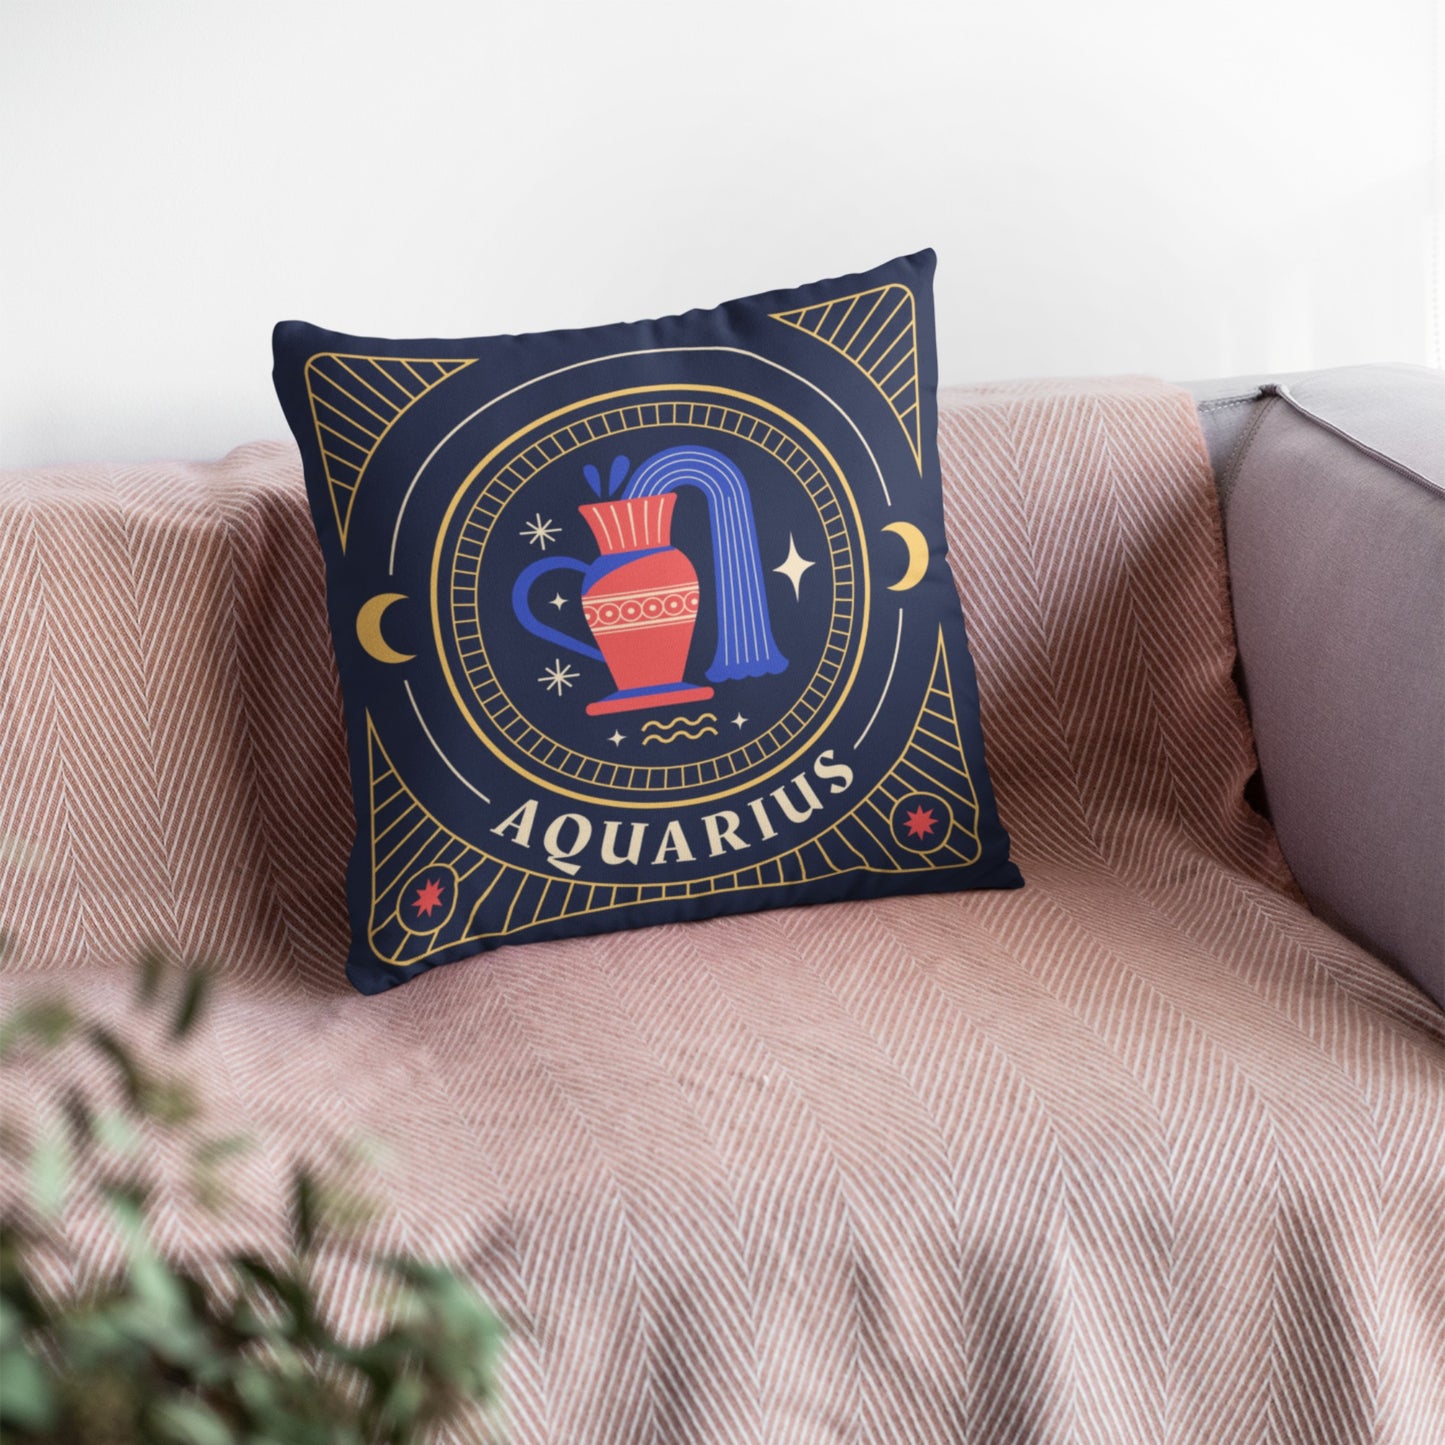 Zodiac-inspired Aquarius Decorative Cushion